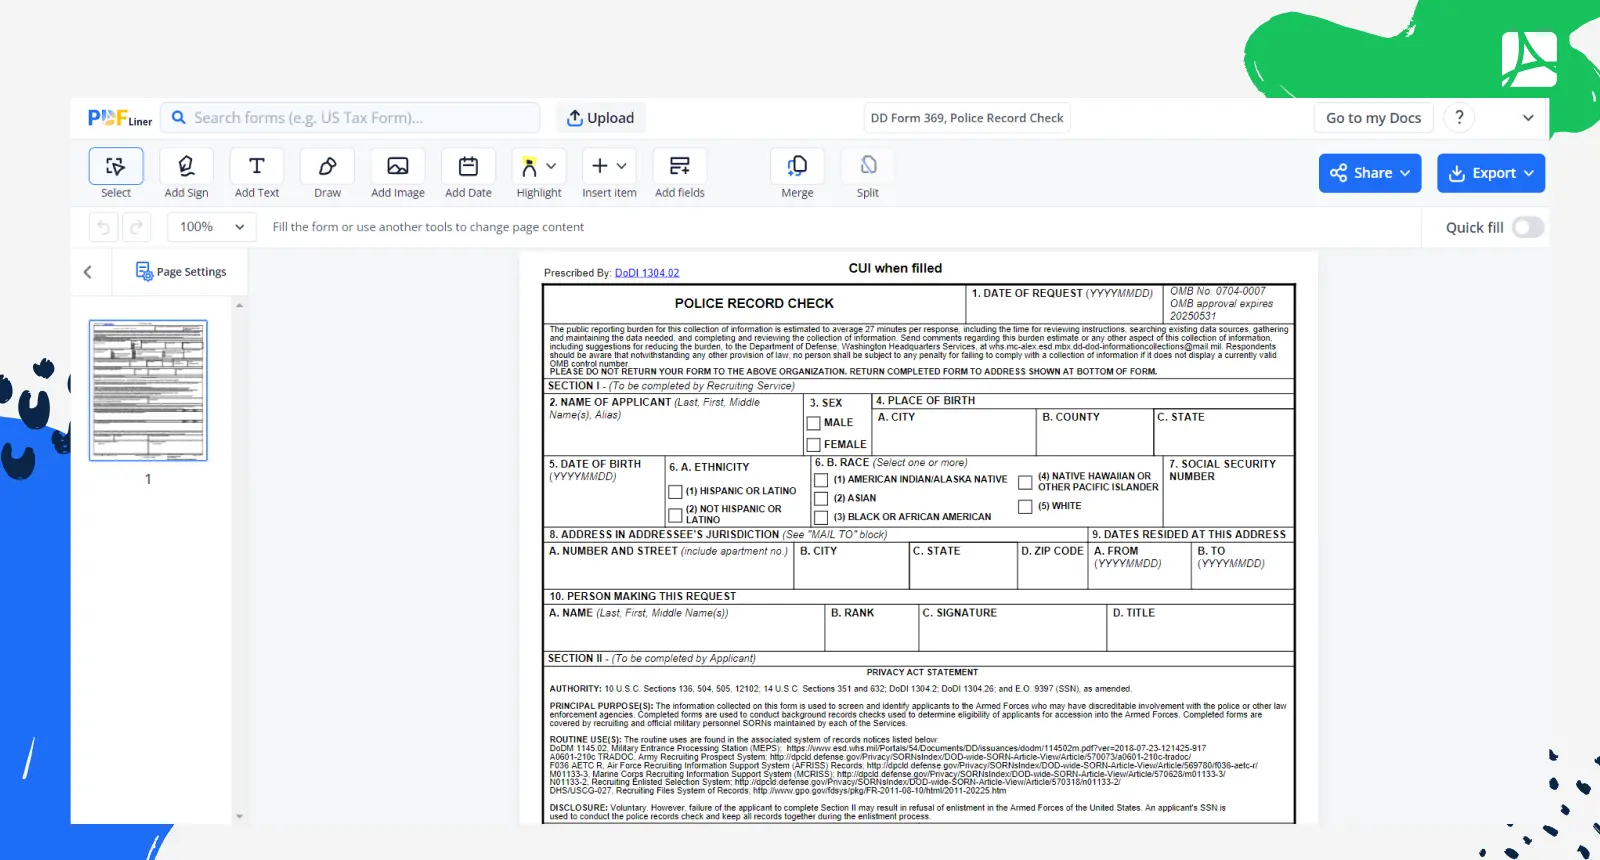 DD Form 369 Police Record Check Screenshot 1